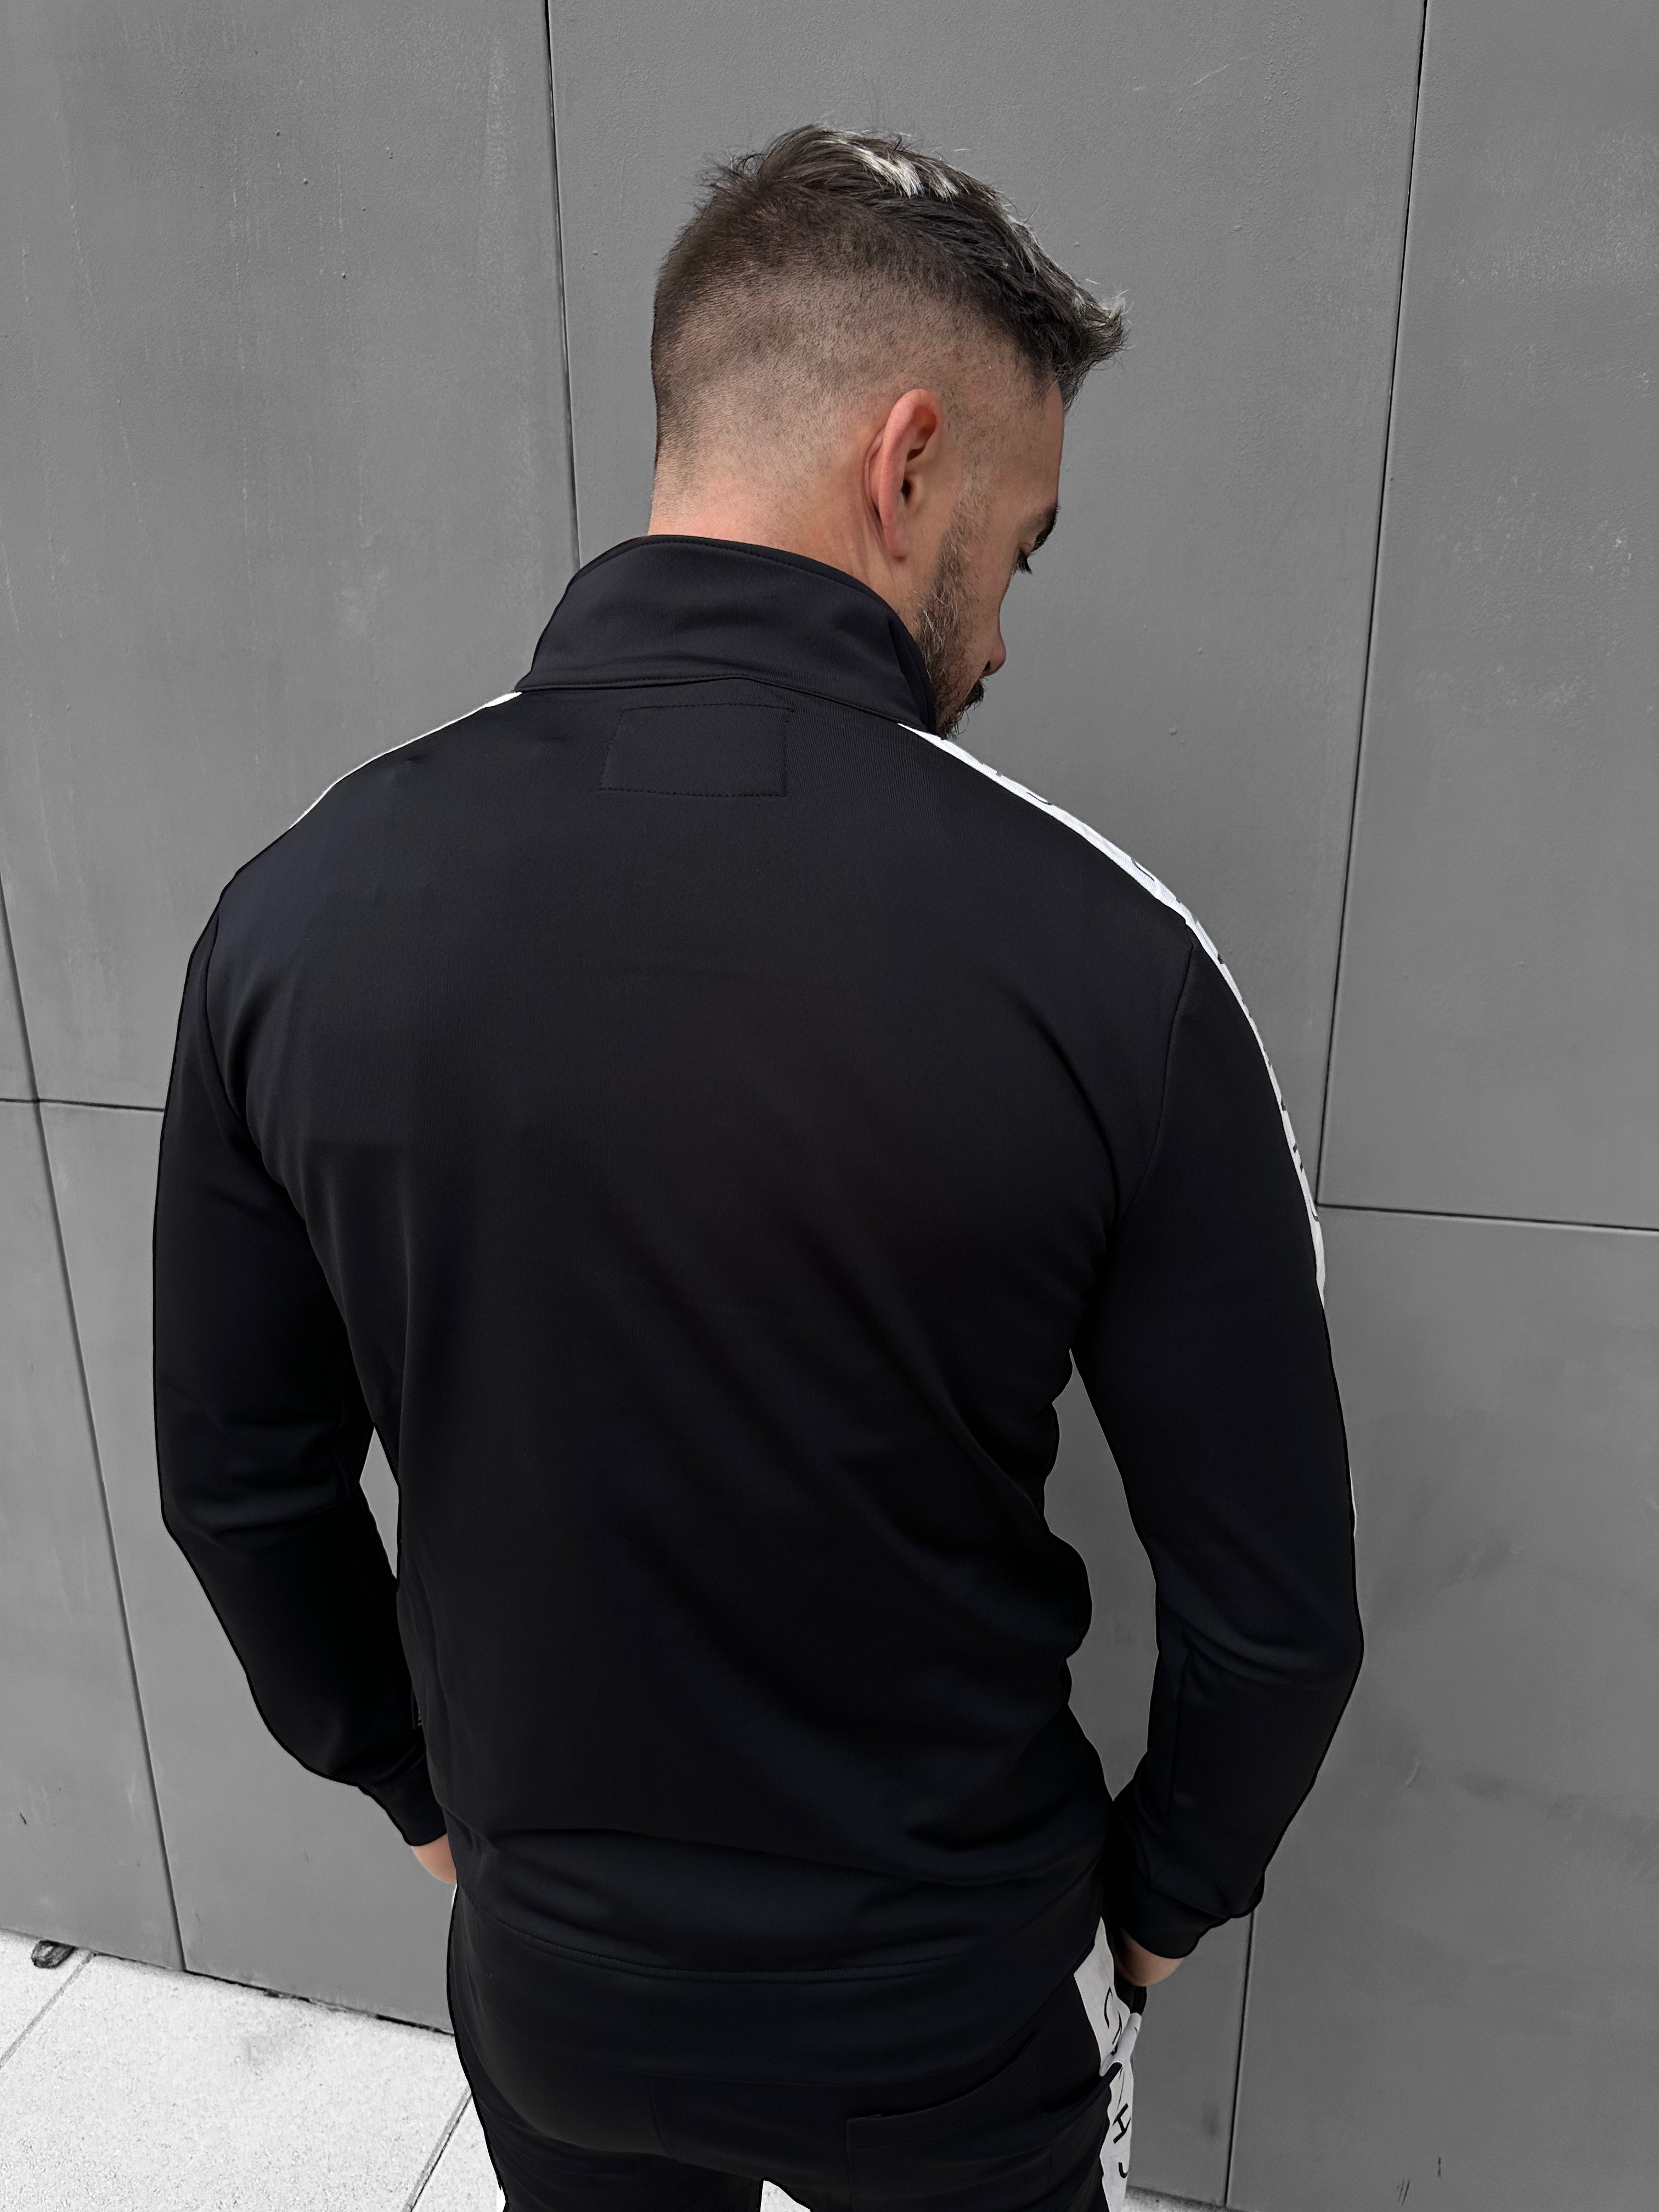 CHABRAND - Black jogging jacket with white stripe